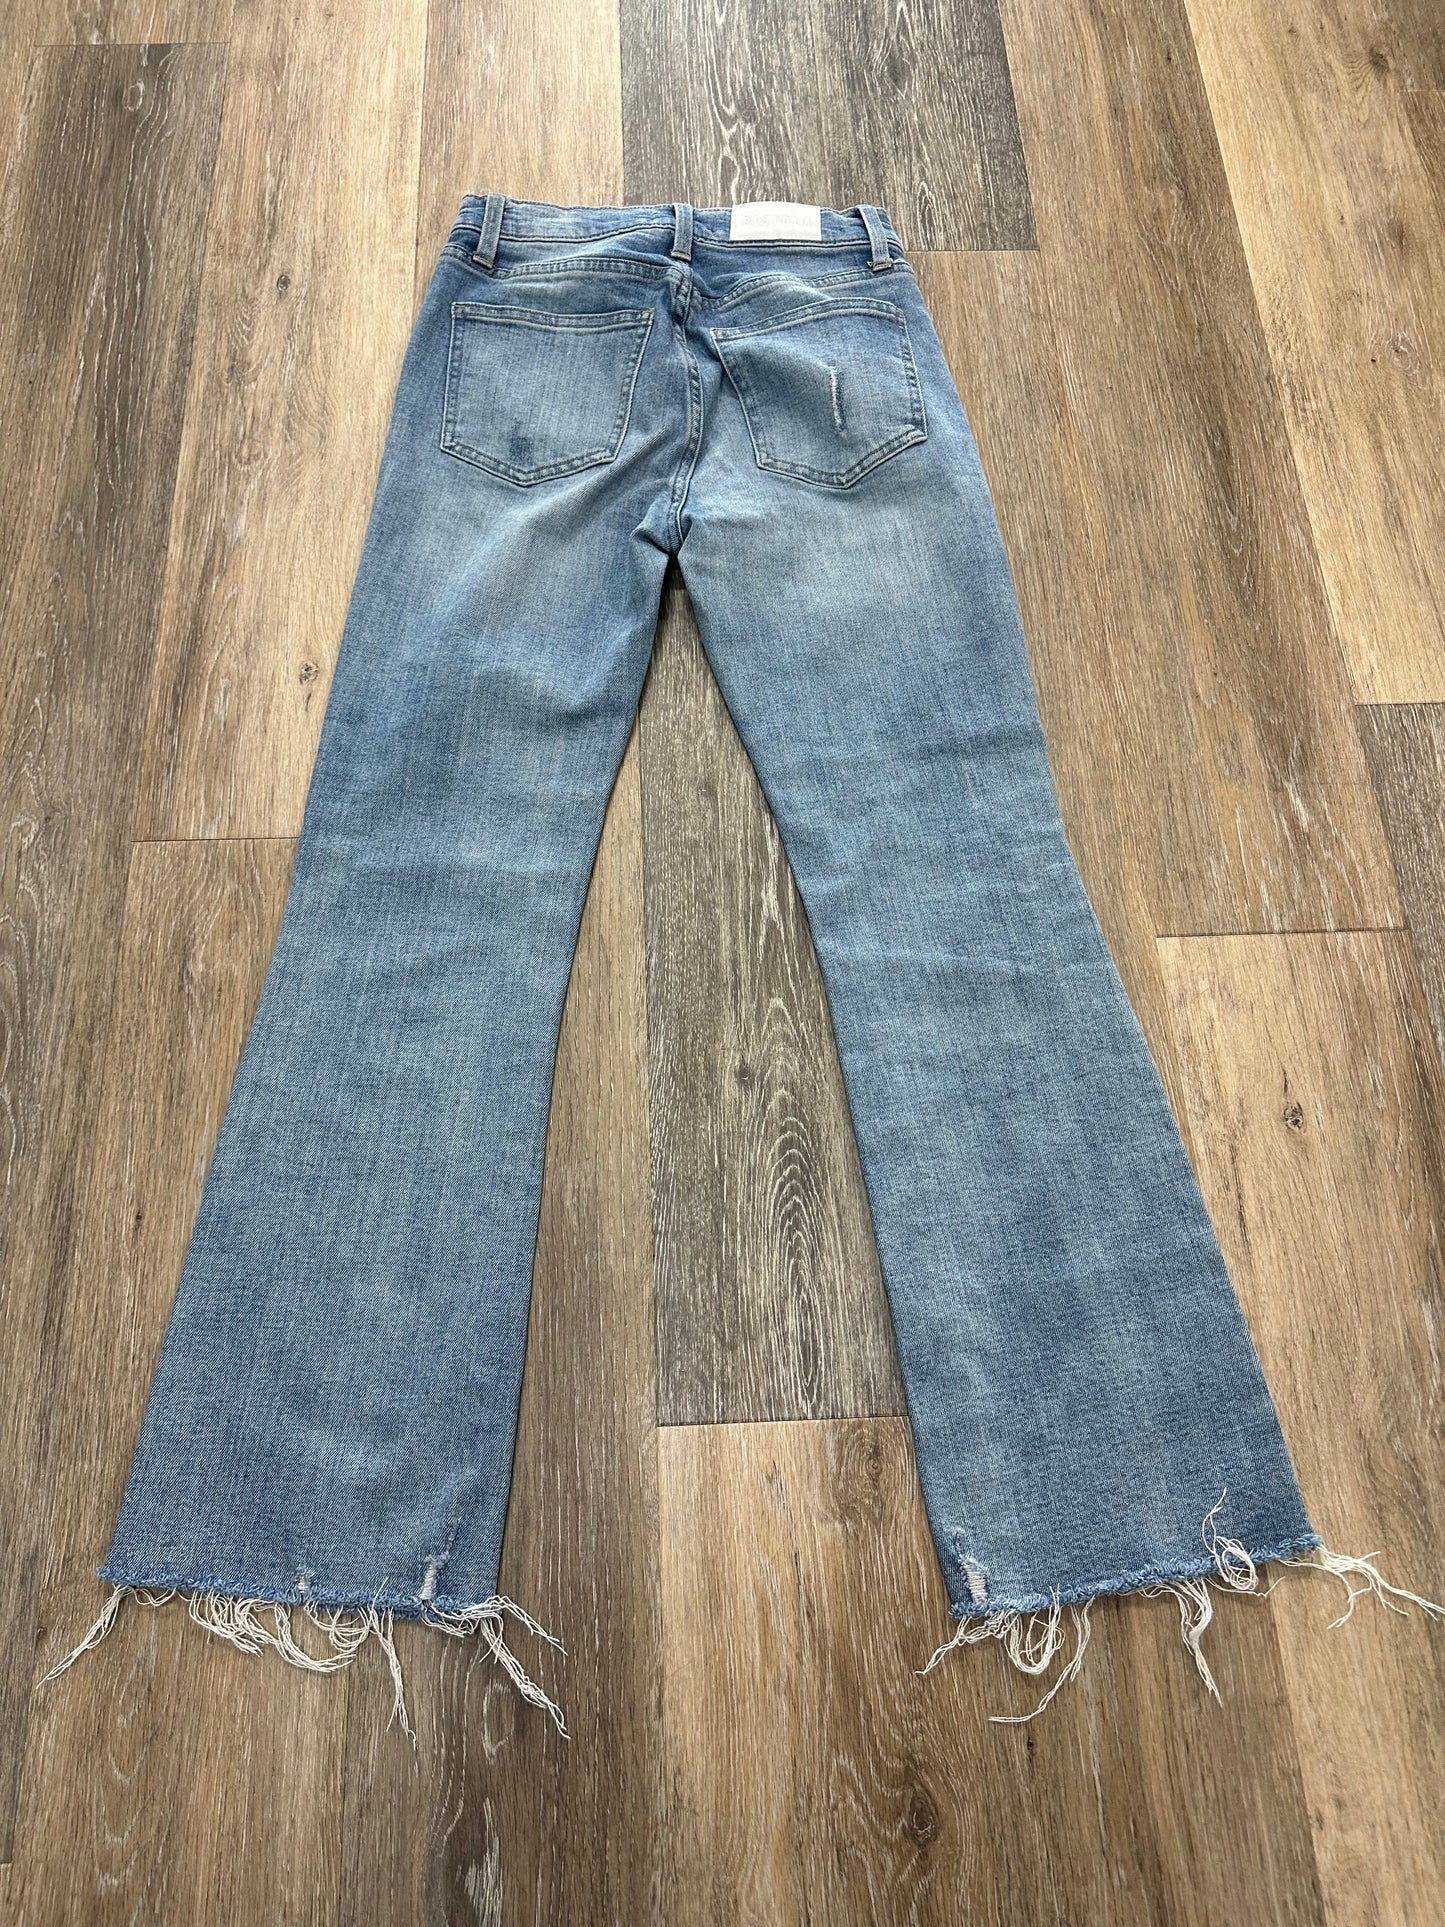 Blue Denim Jeans Designer Pistola, Size 1